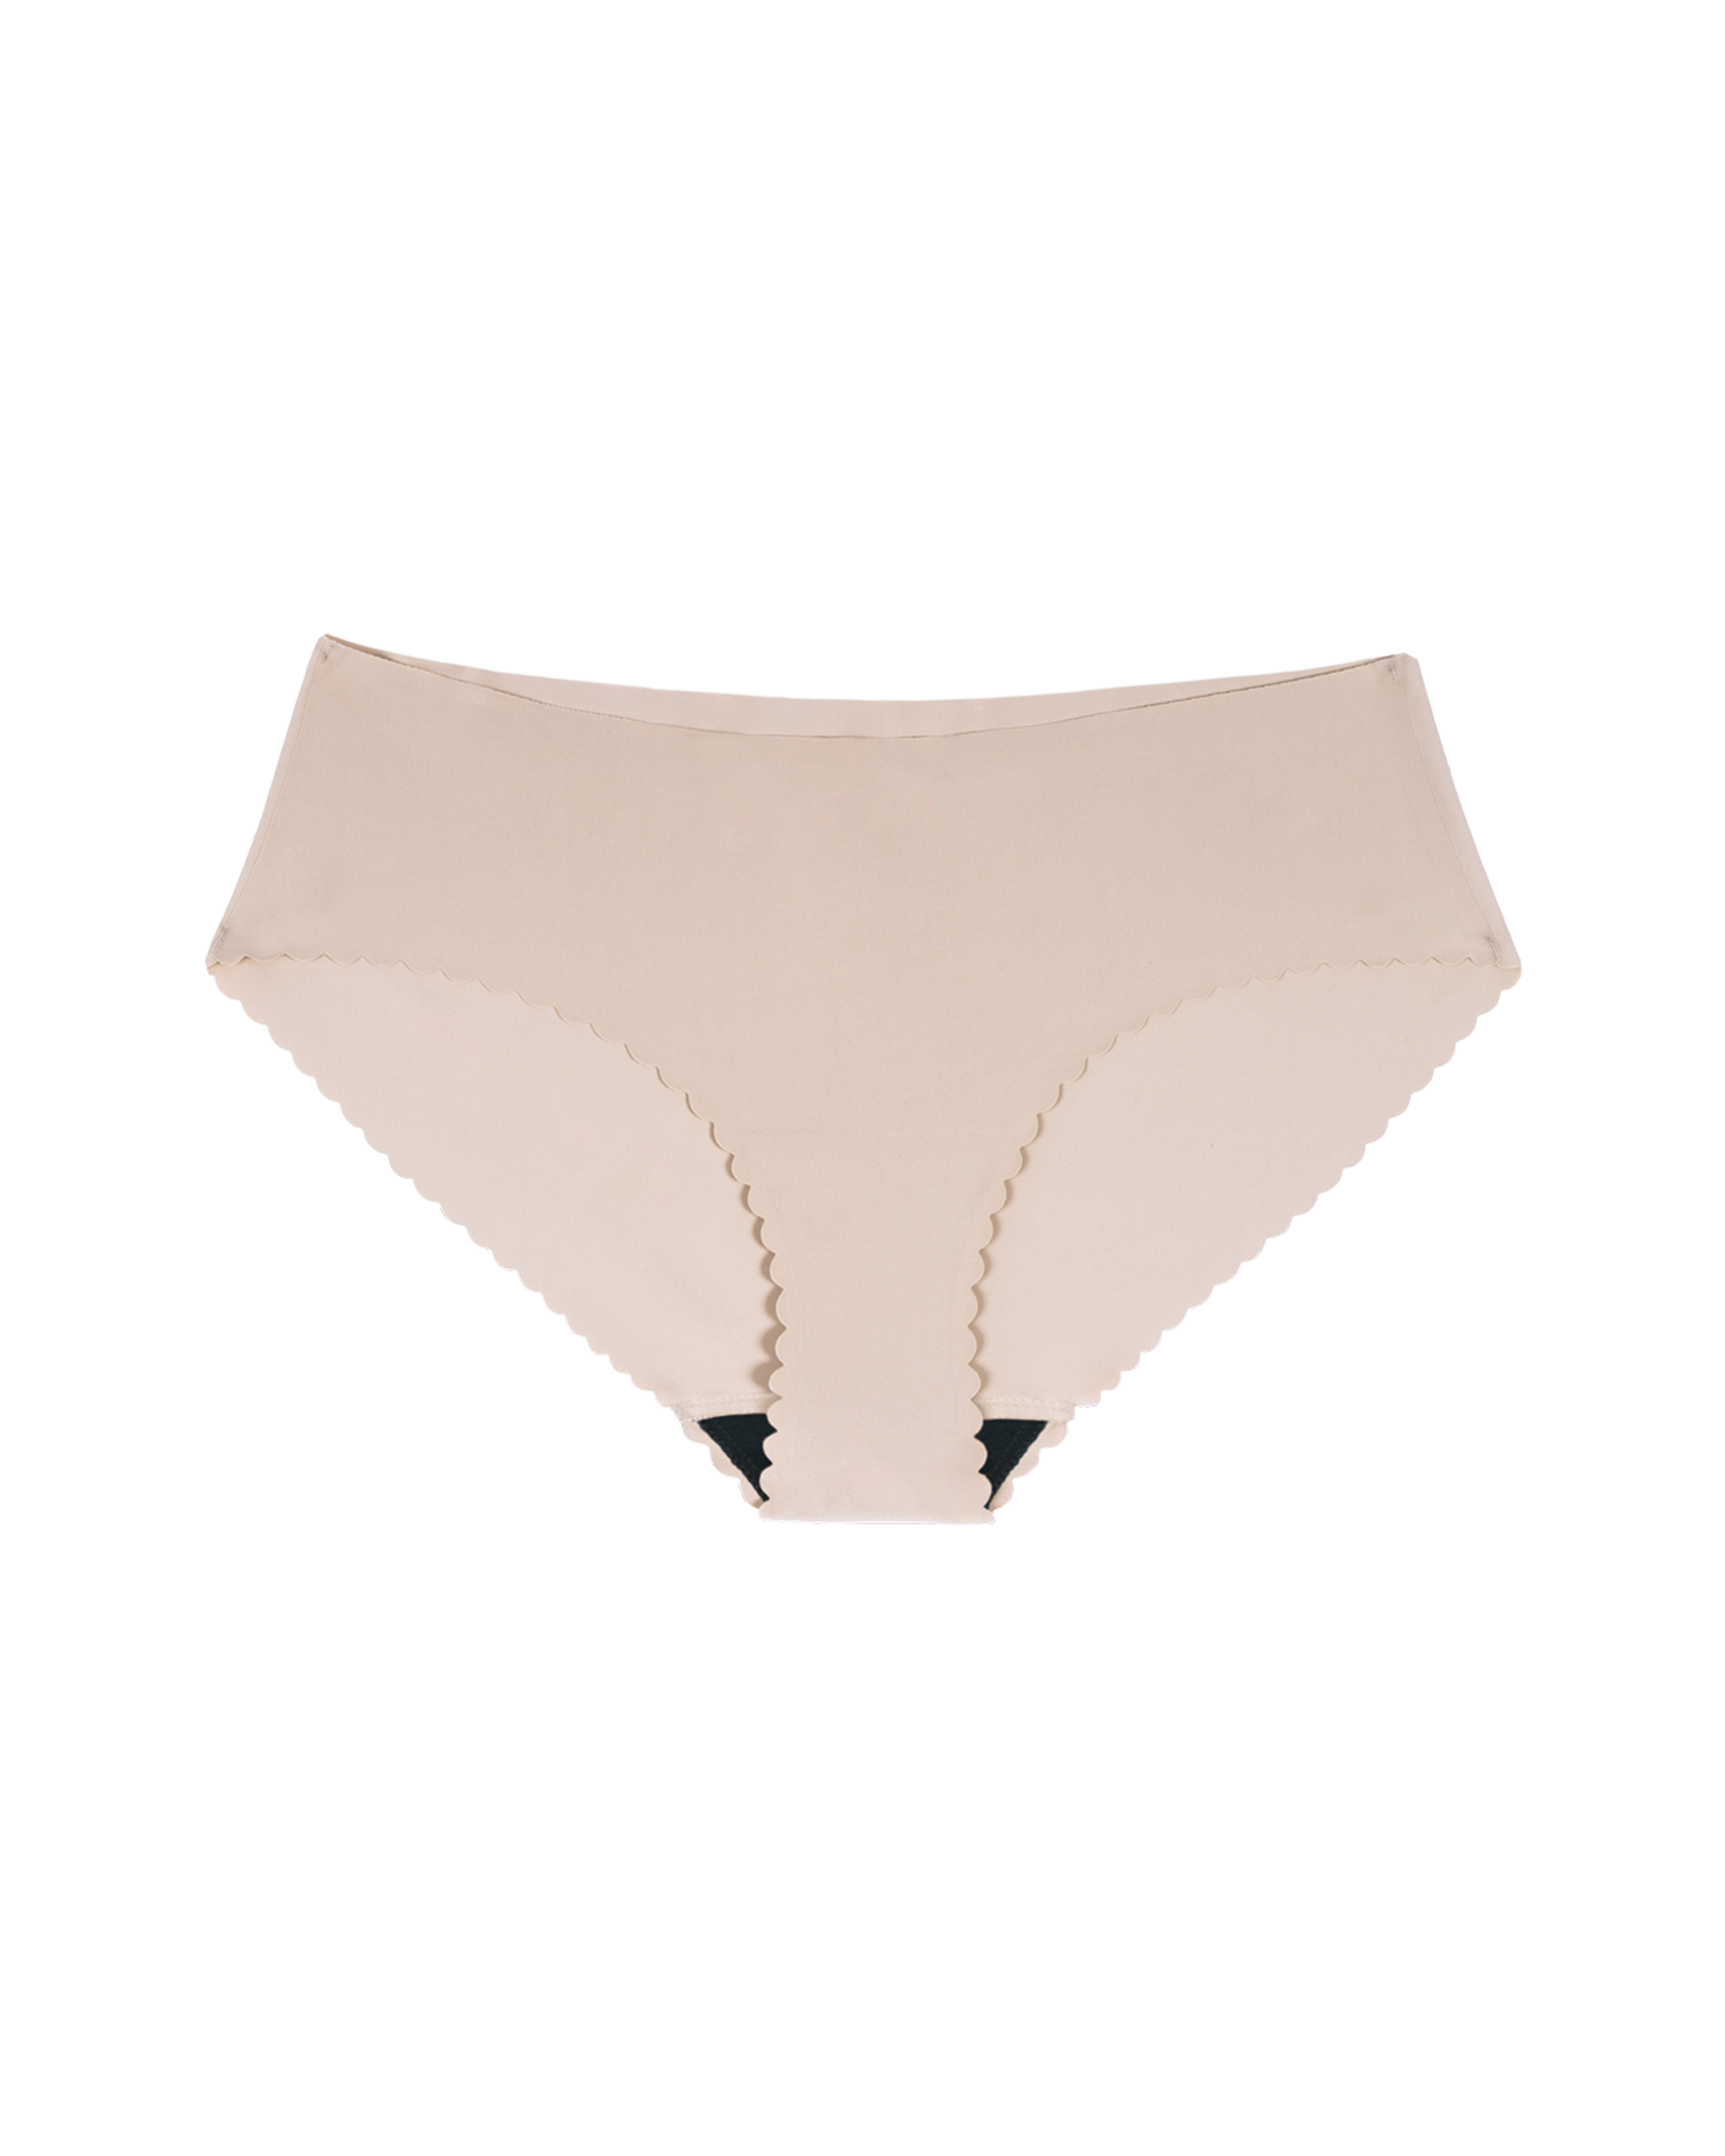 Period Leak Proof Panties Women Underwear Pants Nylon Briefs, Rs  1499.00/piece